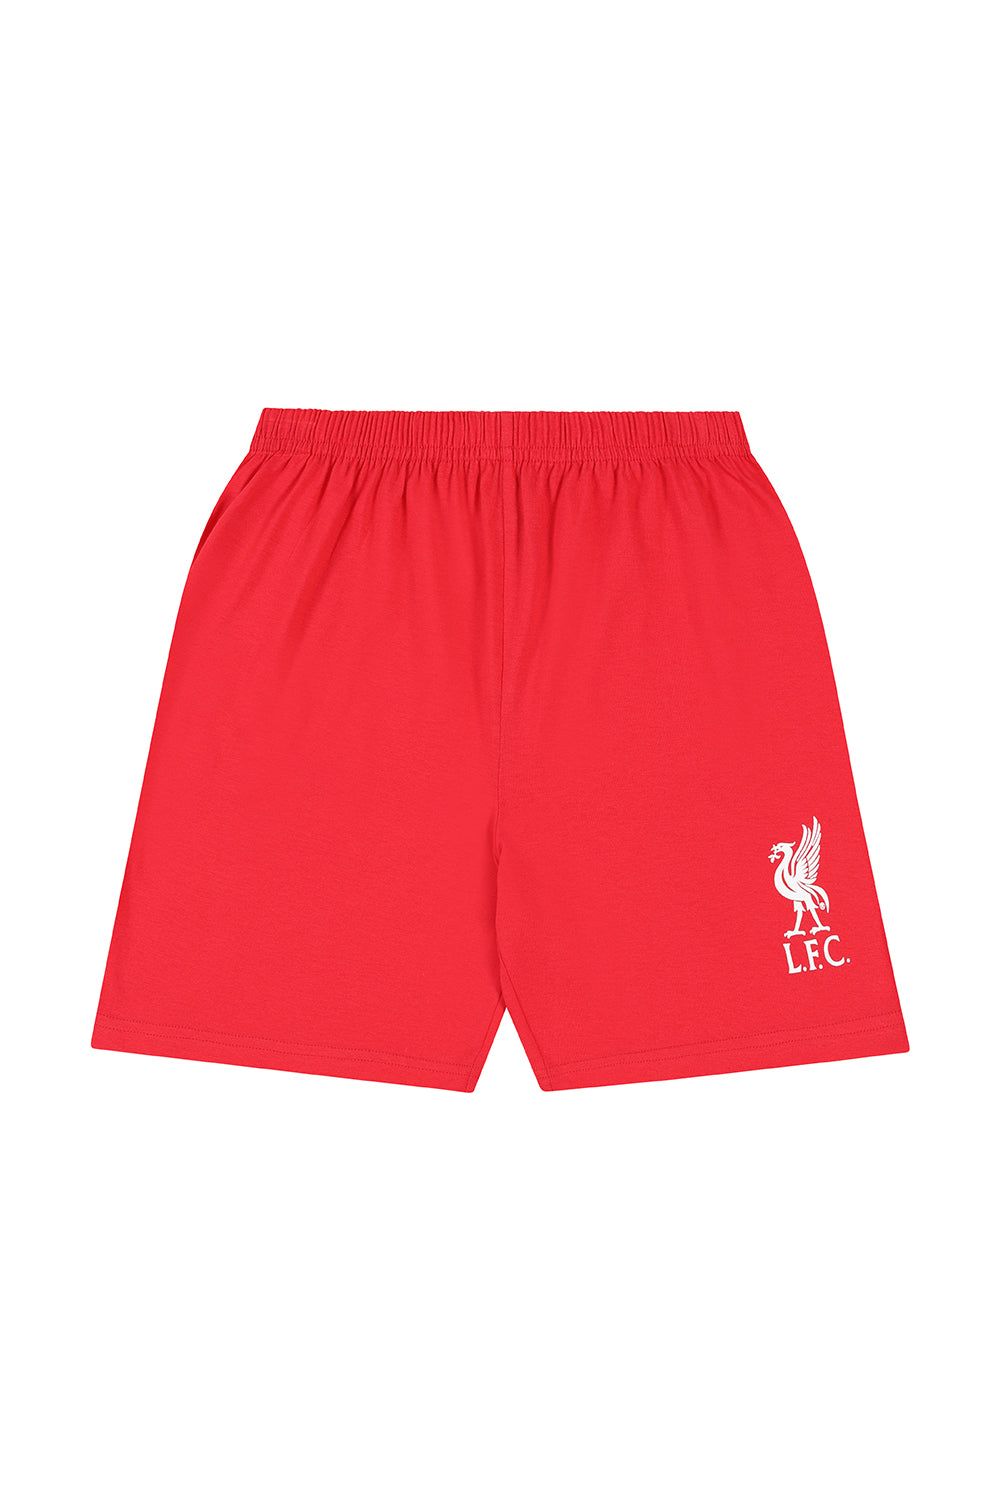 Boys Liverpool F.C Red Camouflage Short LFC Pyjamas